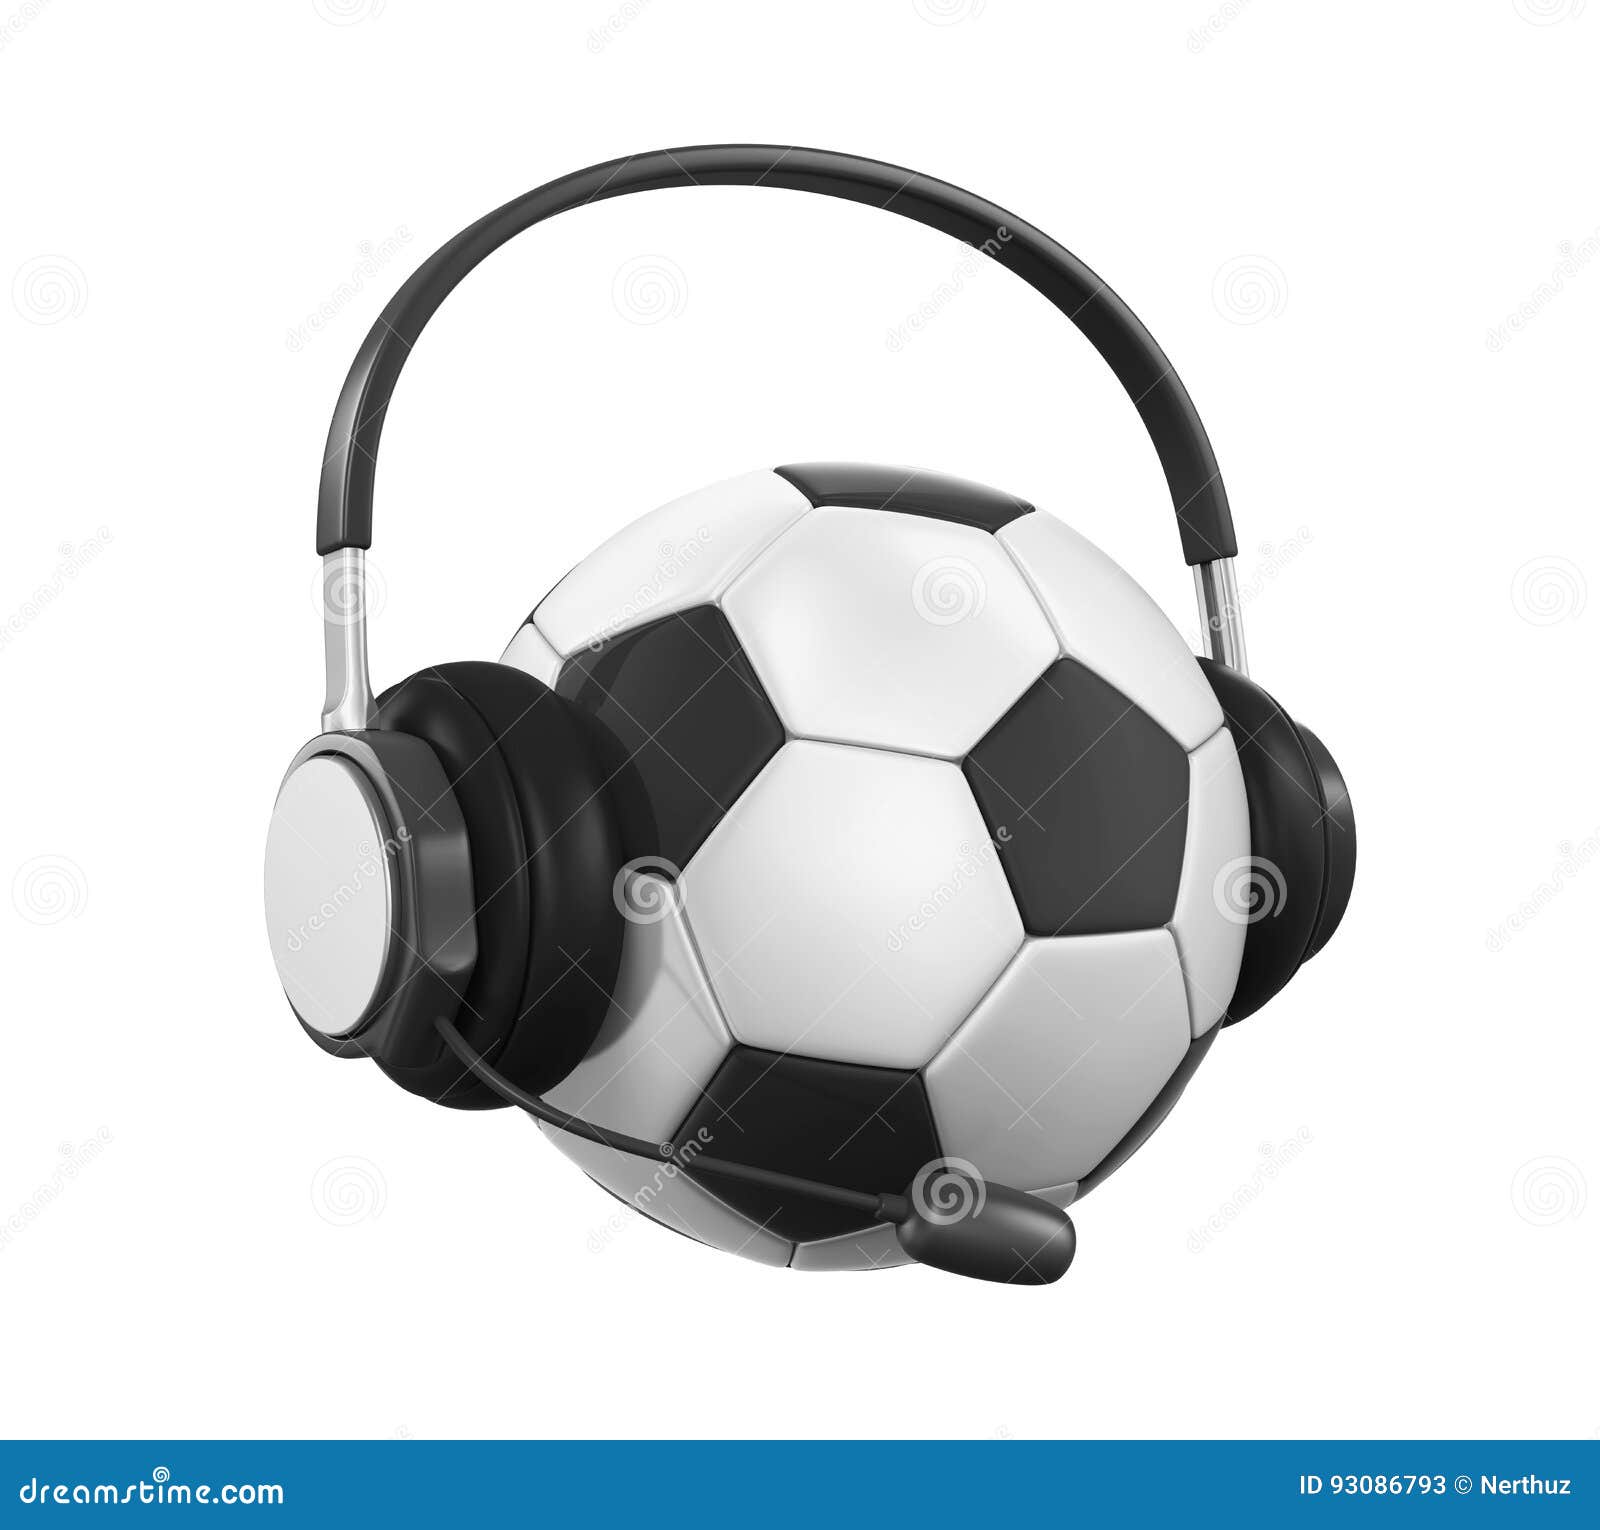 Soccer Ball With Headphone Cartoon Vector Icon Illustration